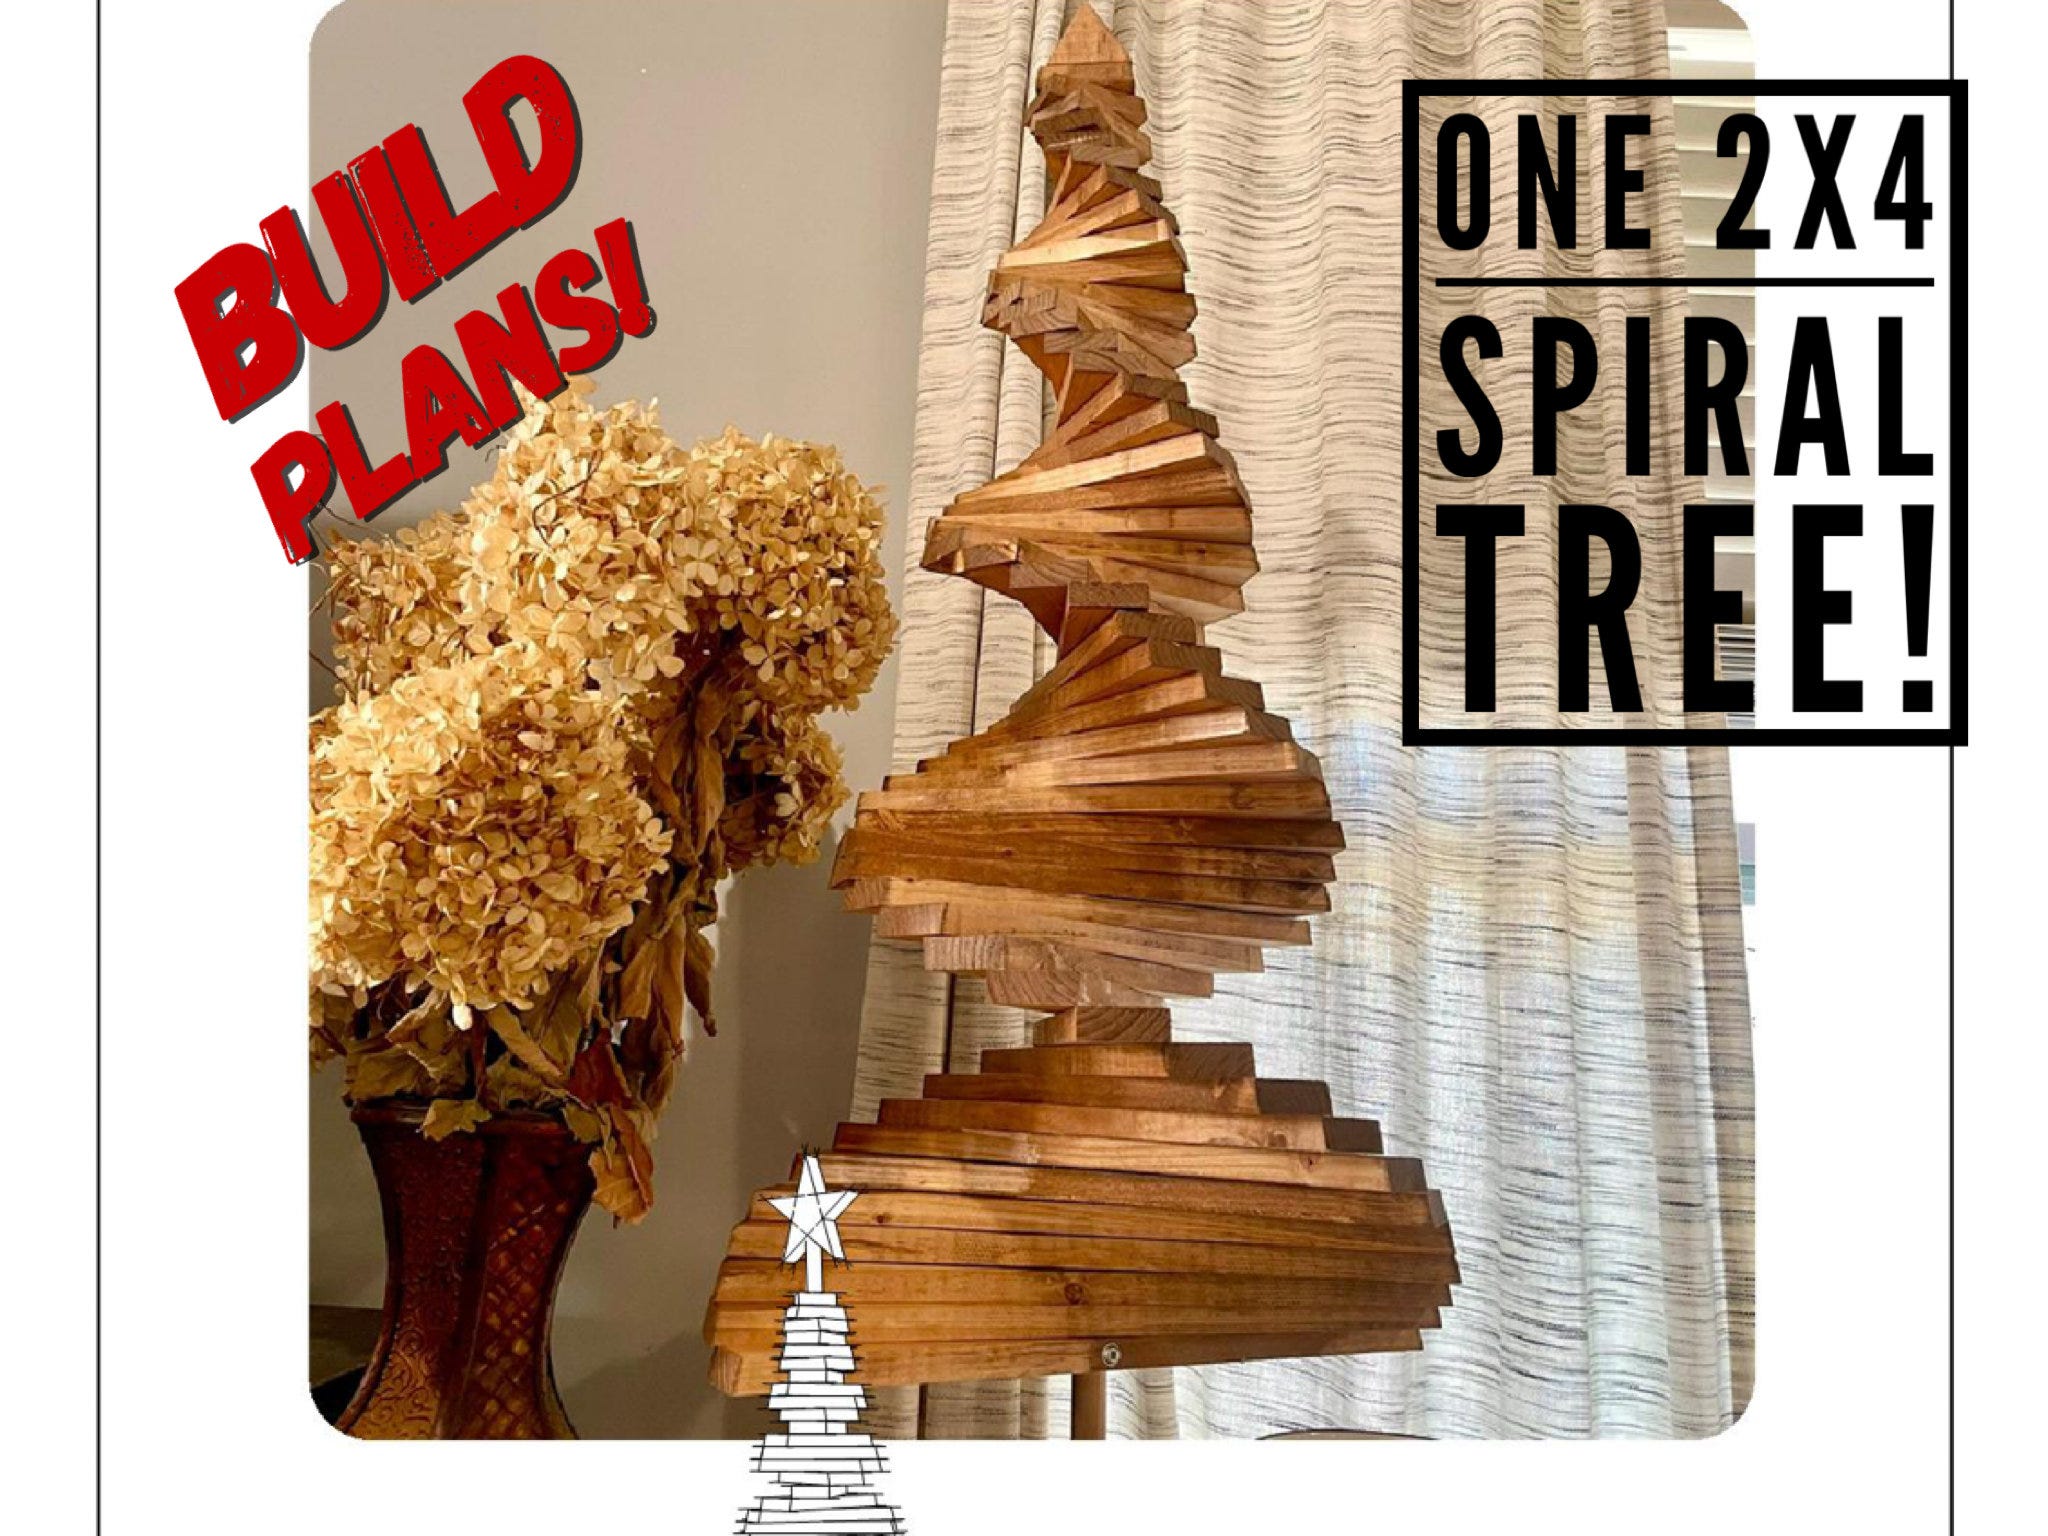 One 2x4 spiral tree plan, Spiral Christmas Tree plan, Wooden spiral Christmas Tree Plans, DIY Spiral Christmas Tree, One Board Spiral Tree